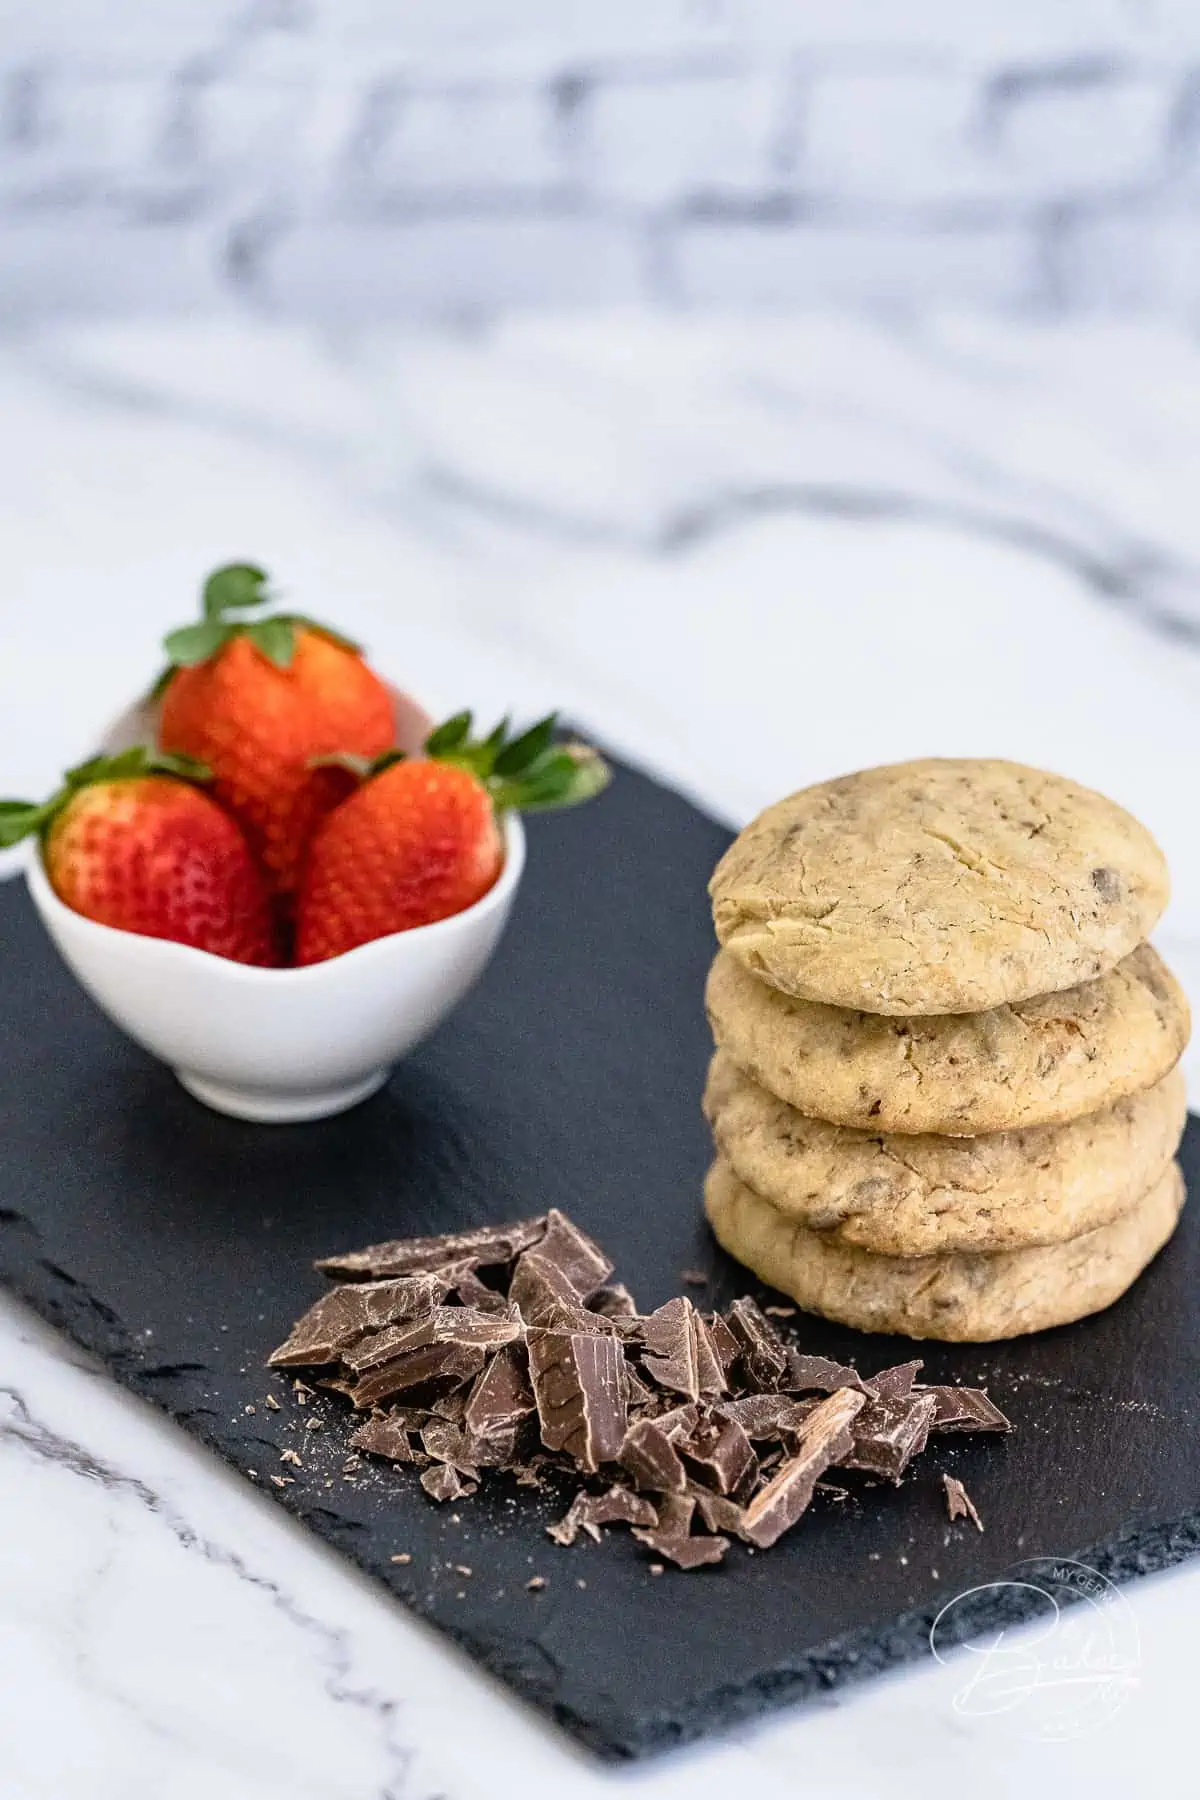 Bestes Chocolate Chunk Cookies Rezept -Leckere Schokoladen Kekse - beste Chocolate Chunk Cookies - Kekse mit Schokostückchen - Sckoko-Kekse